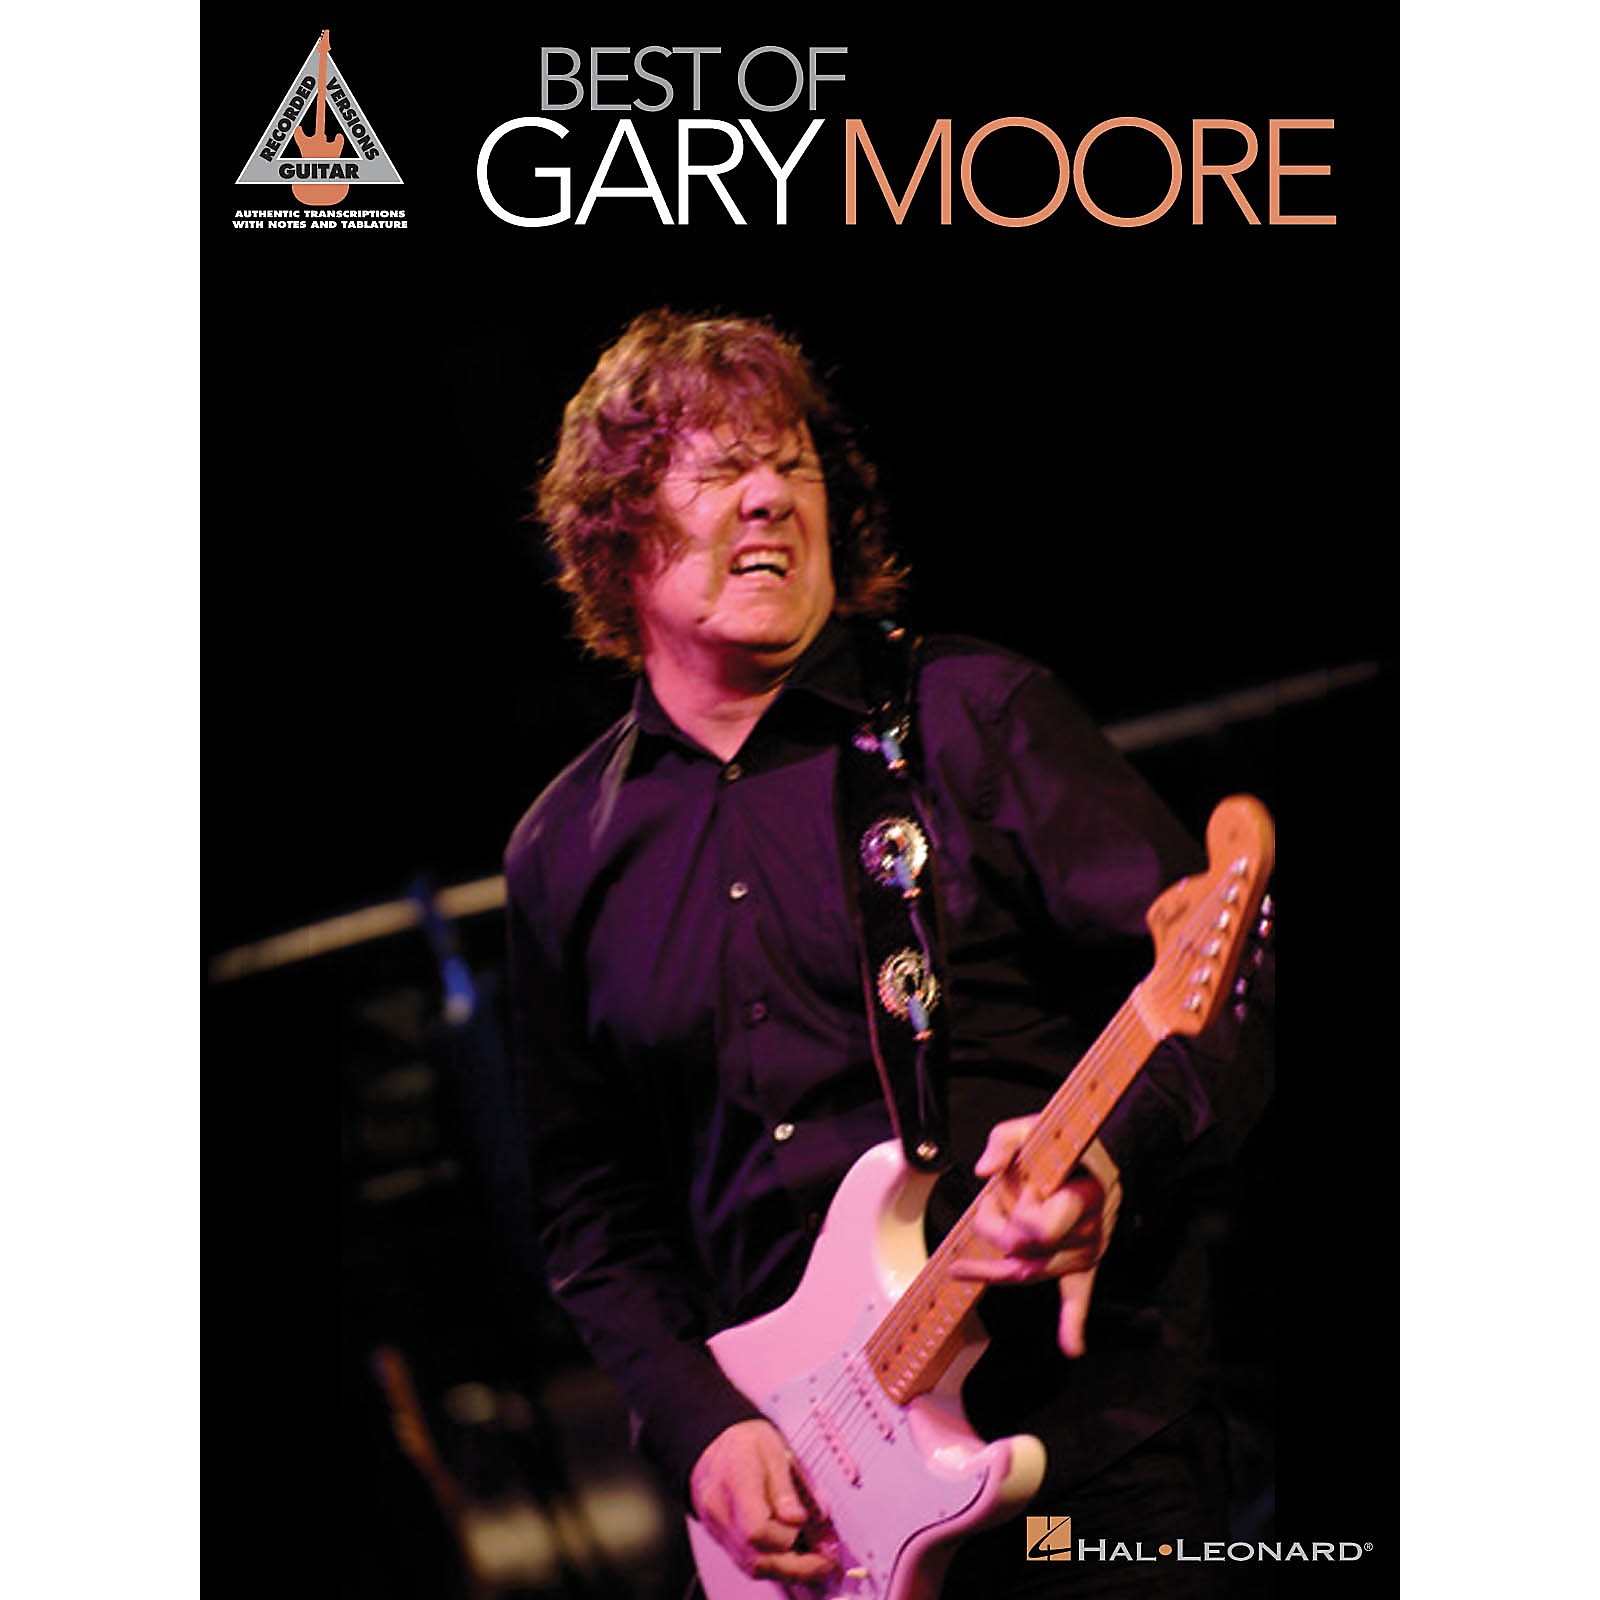 Walking By Myself by Gary Moore - Guitar Tab - Guitar Instructor